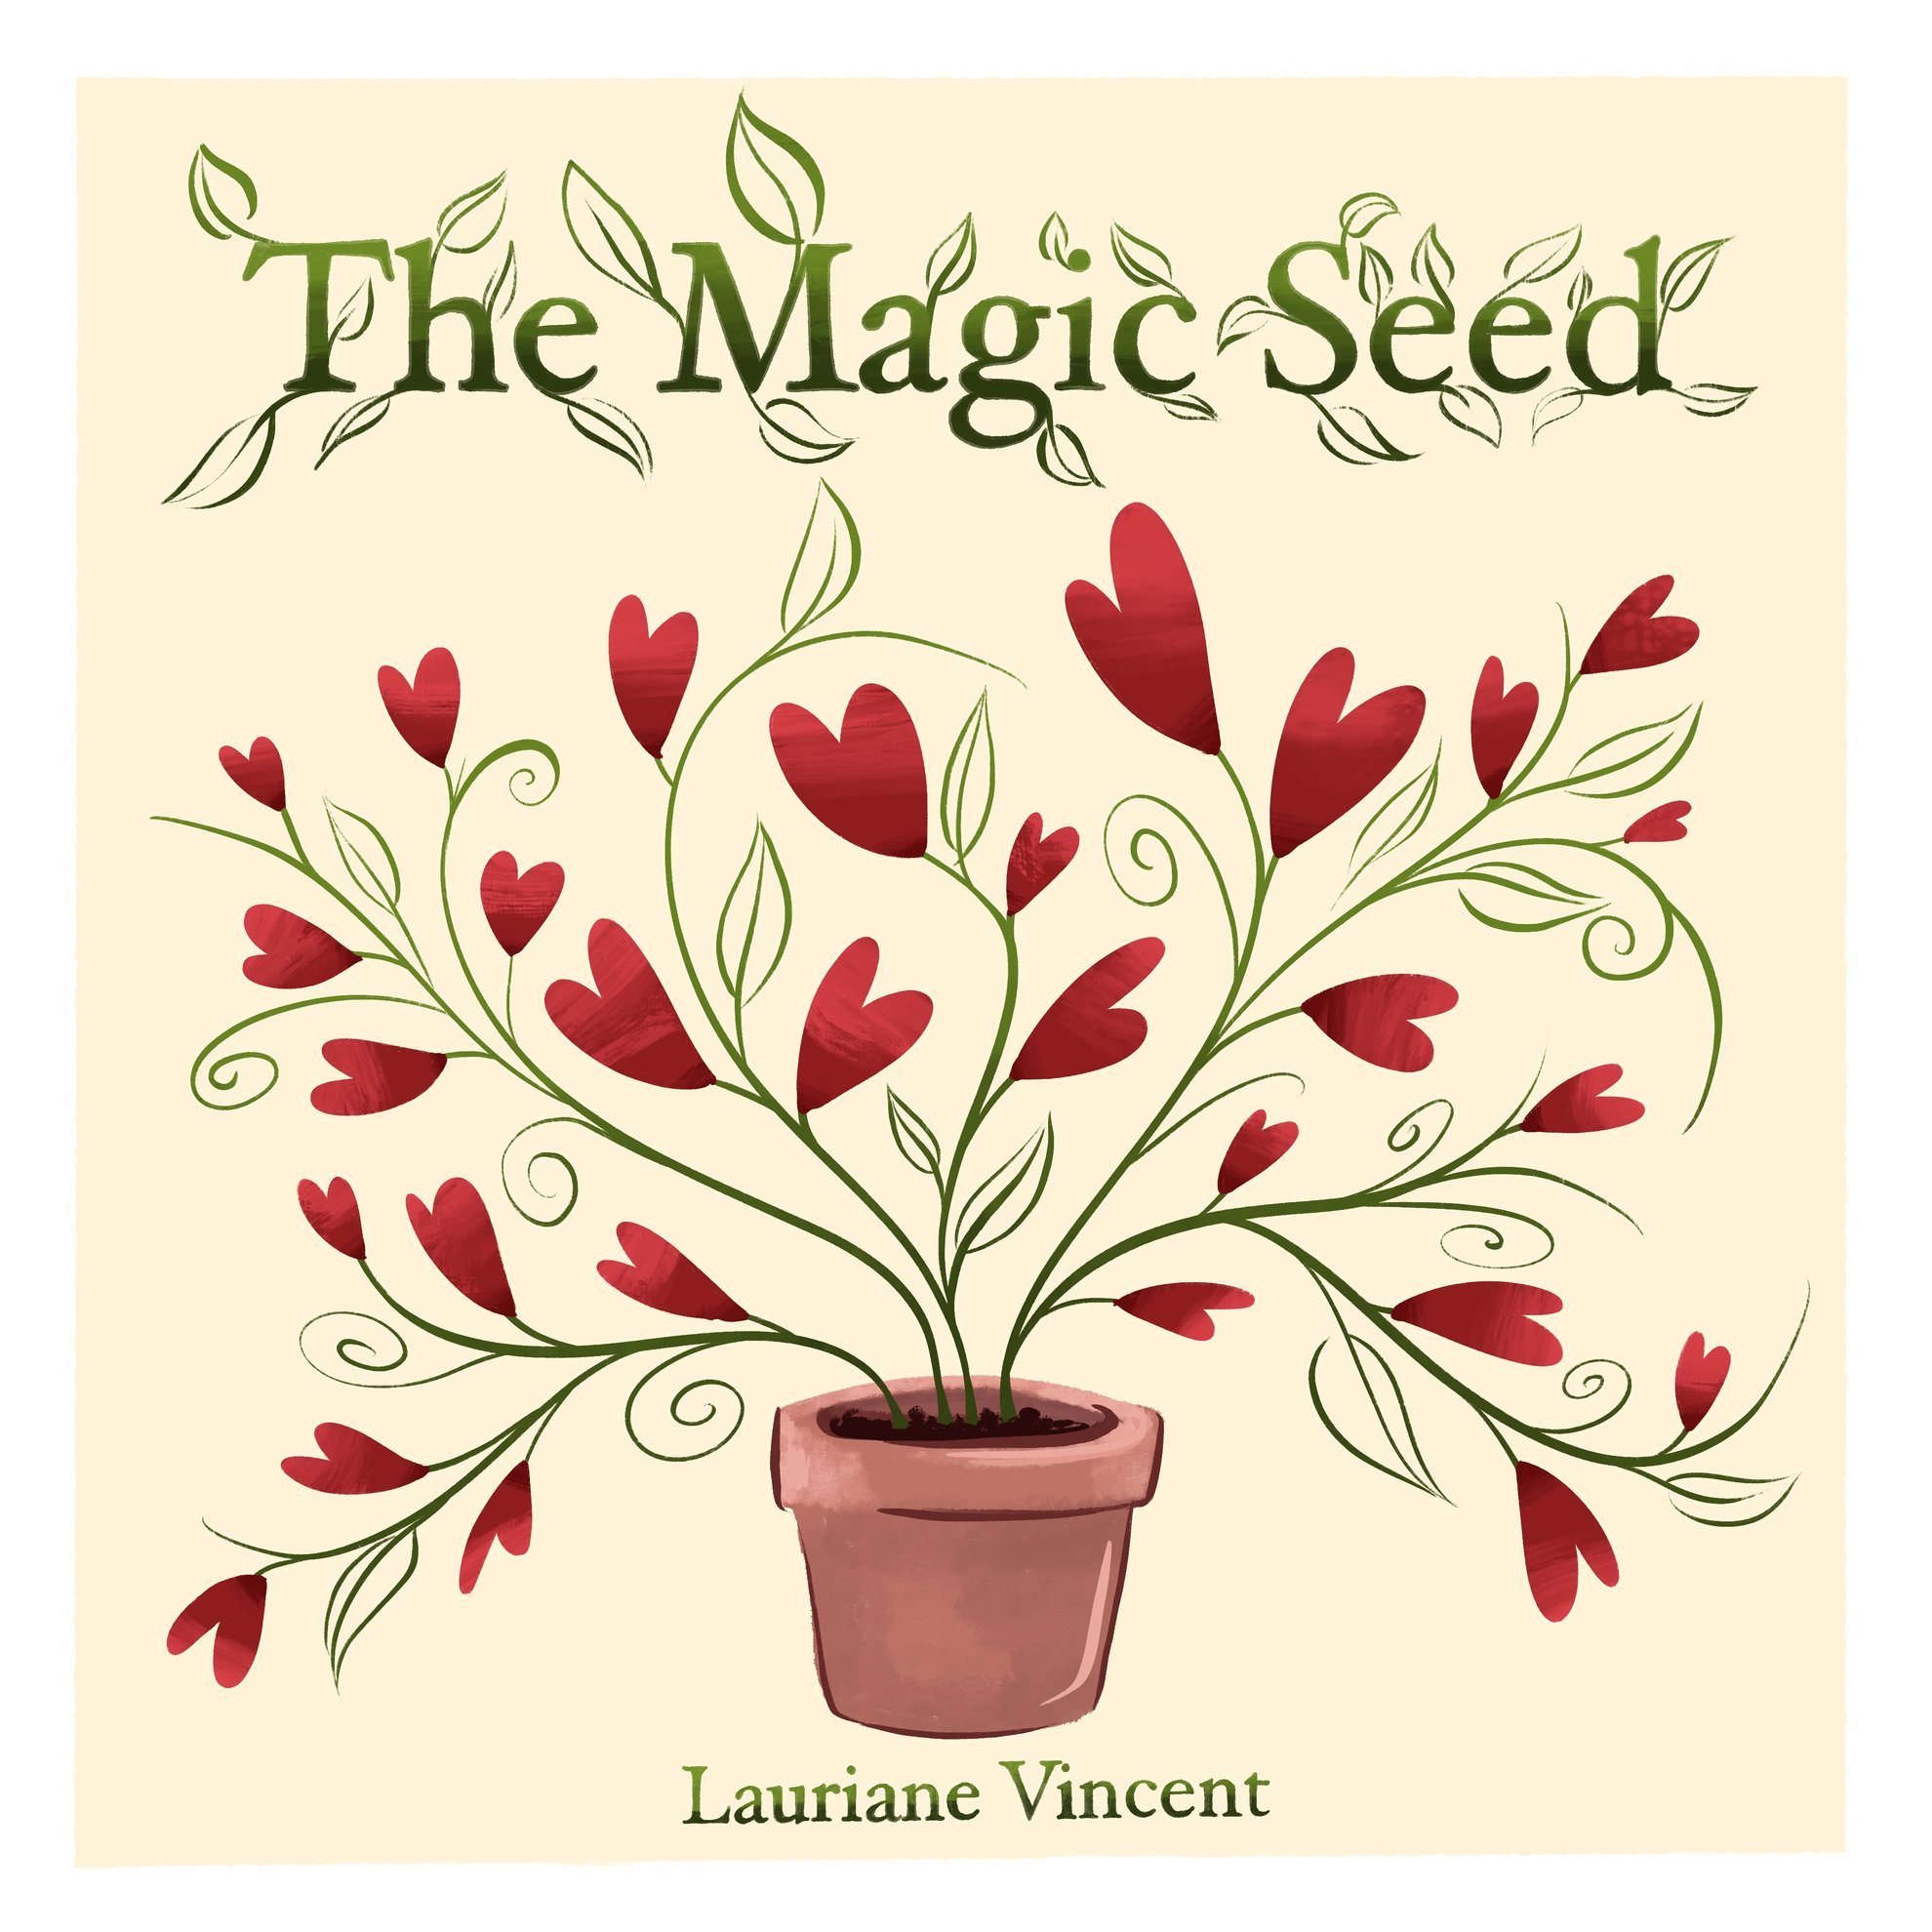 The magic seed